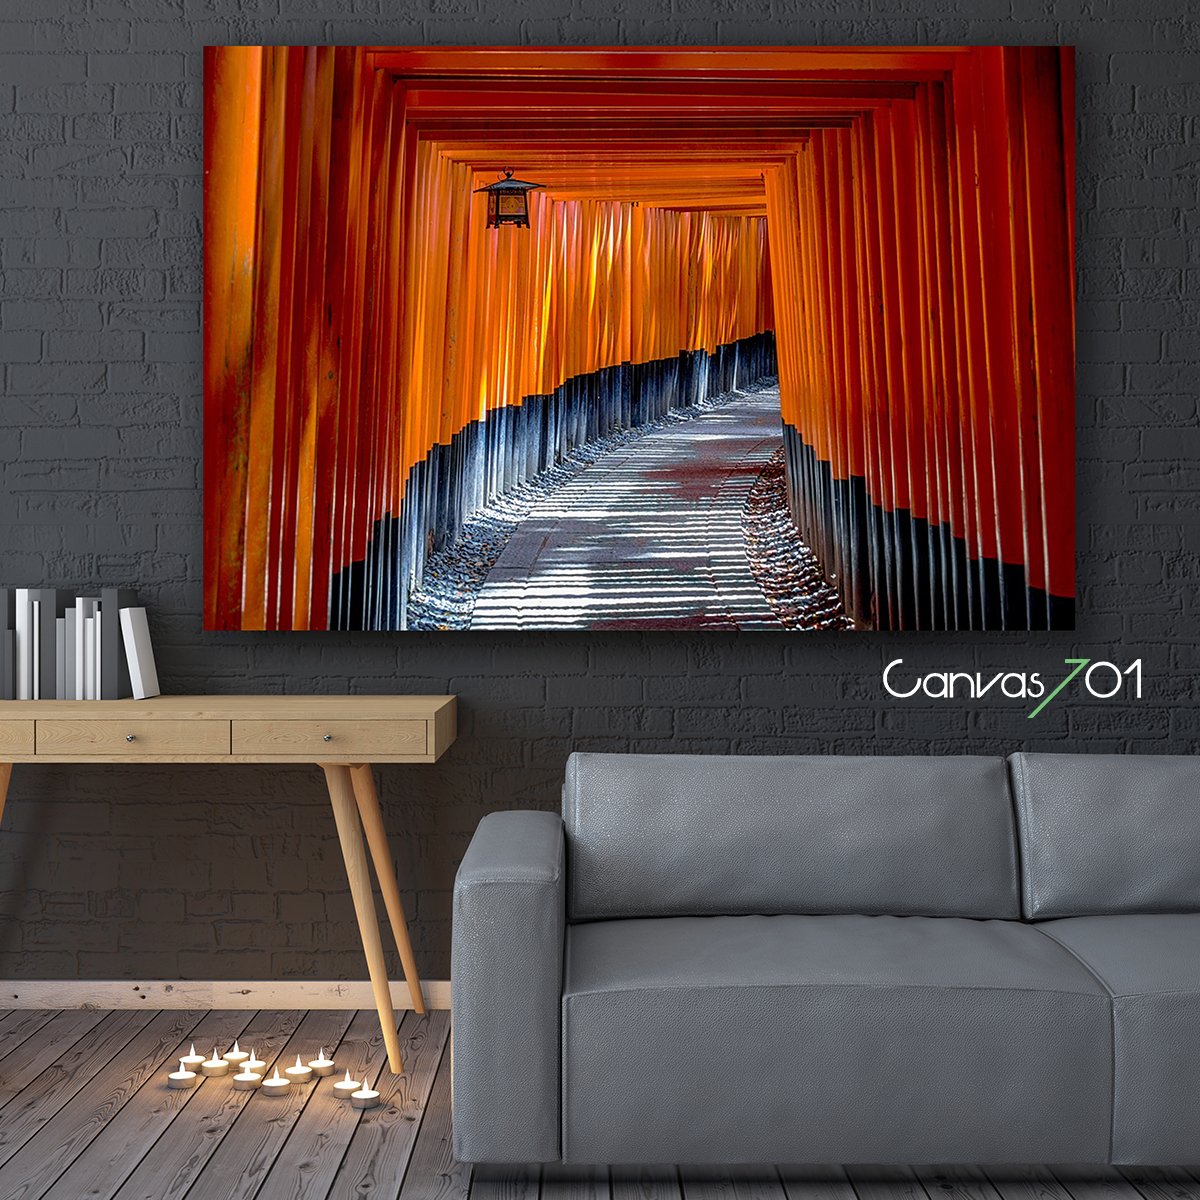 Canvas701 | Tünel Kanvas Tablo